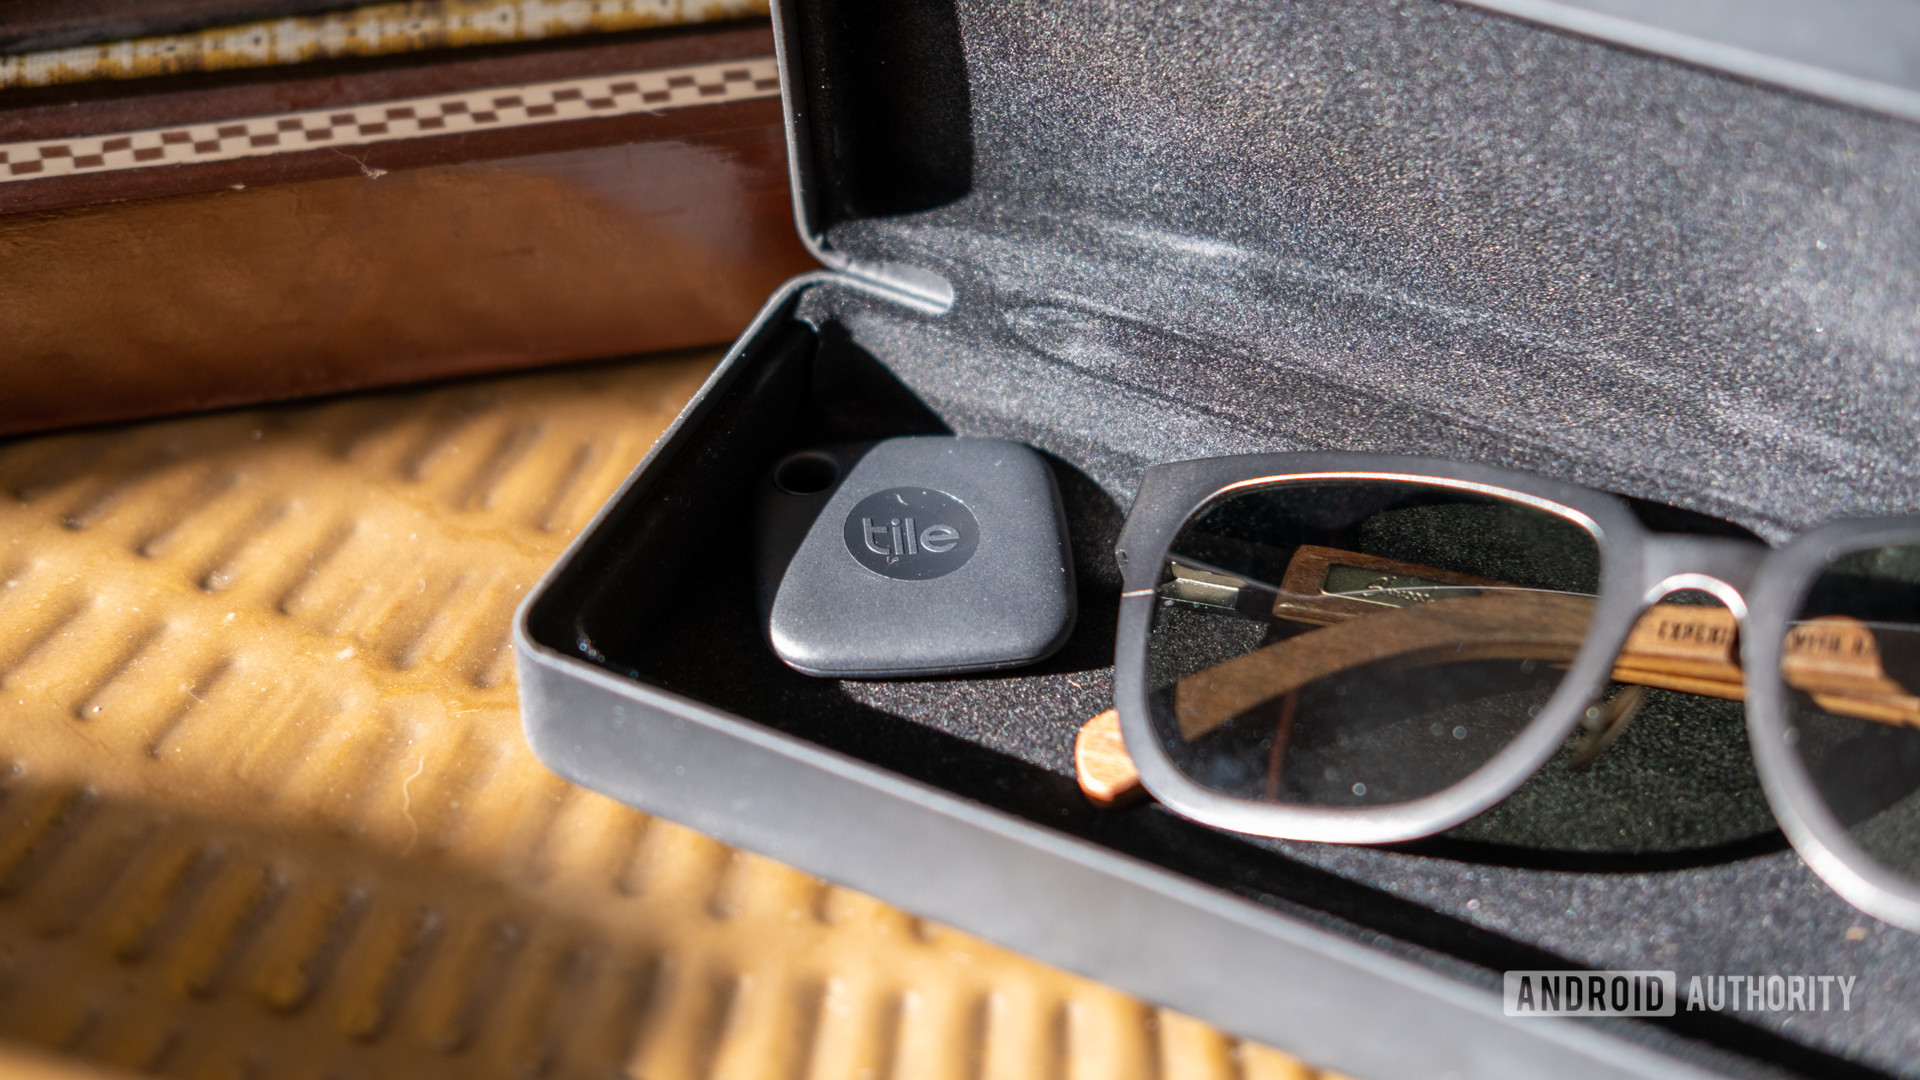 The black Tile Mate in a sunglasses case